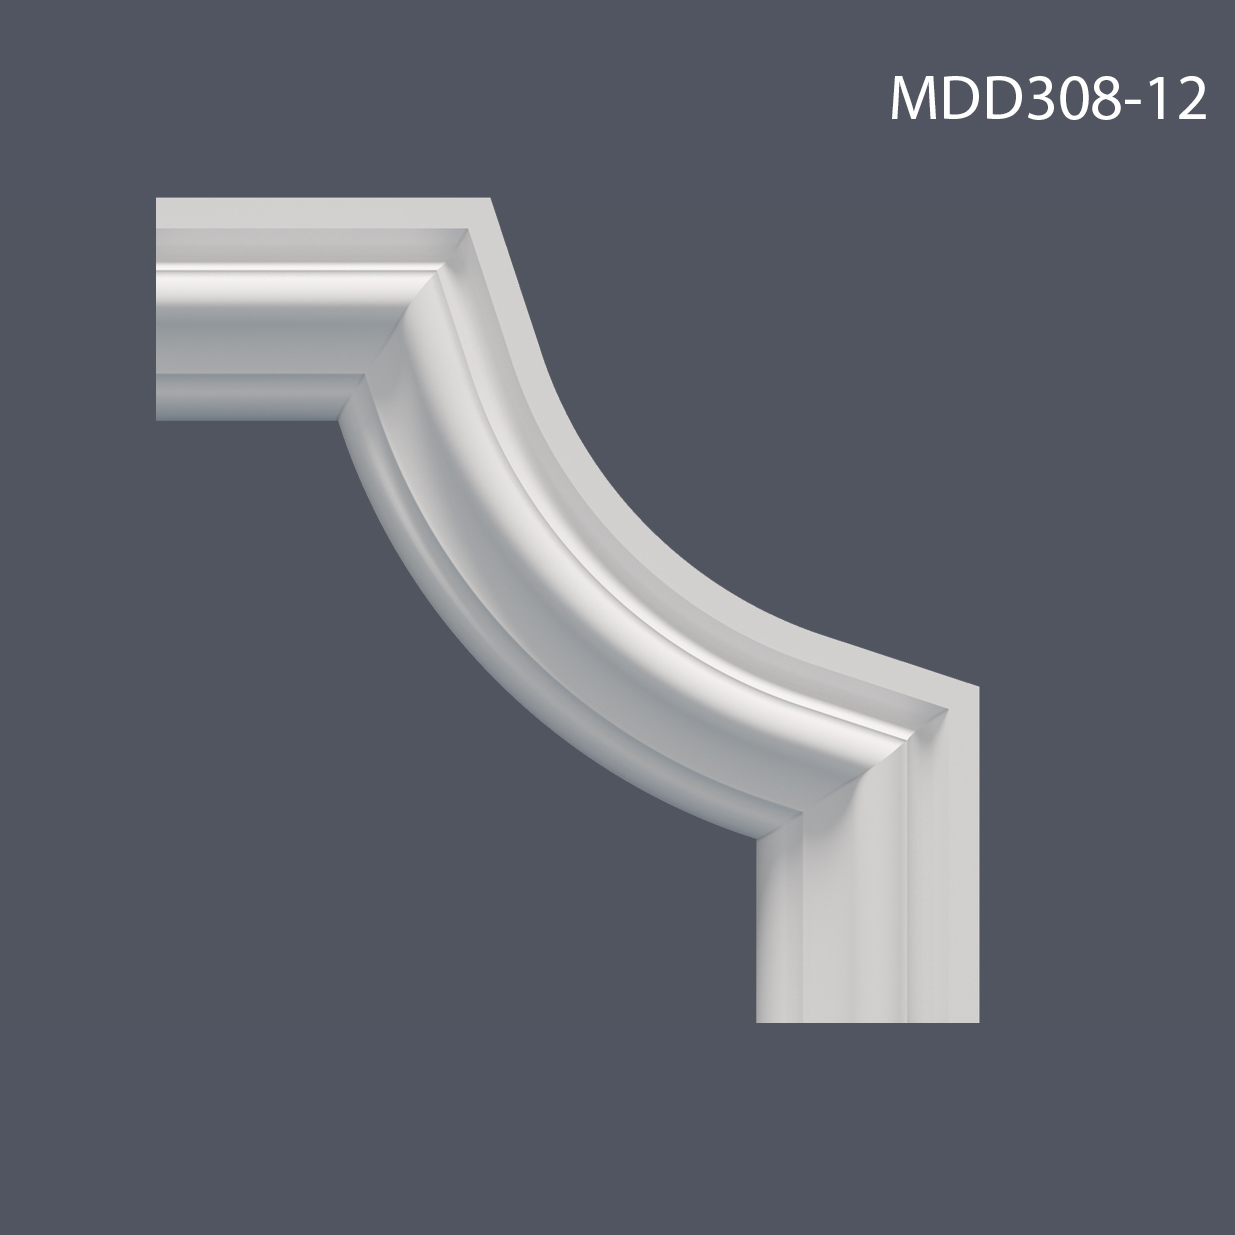 Coltar decorativ MDD308-12 pentru braul MDD308F, 24 X 24 X 6.5 cm, Mardom Decor